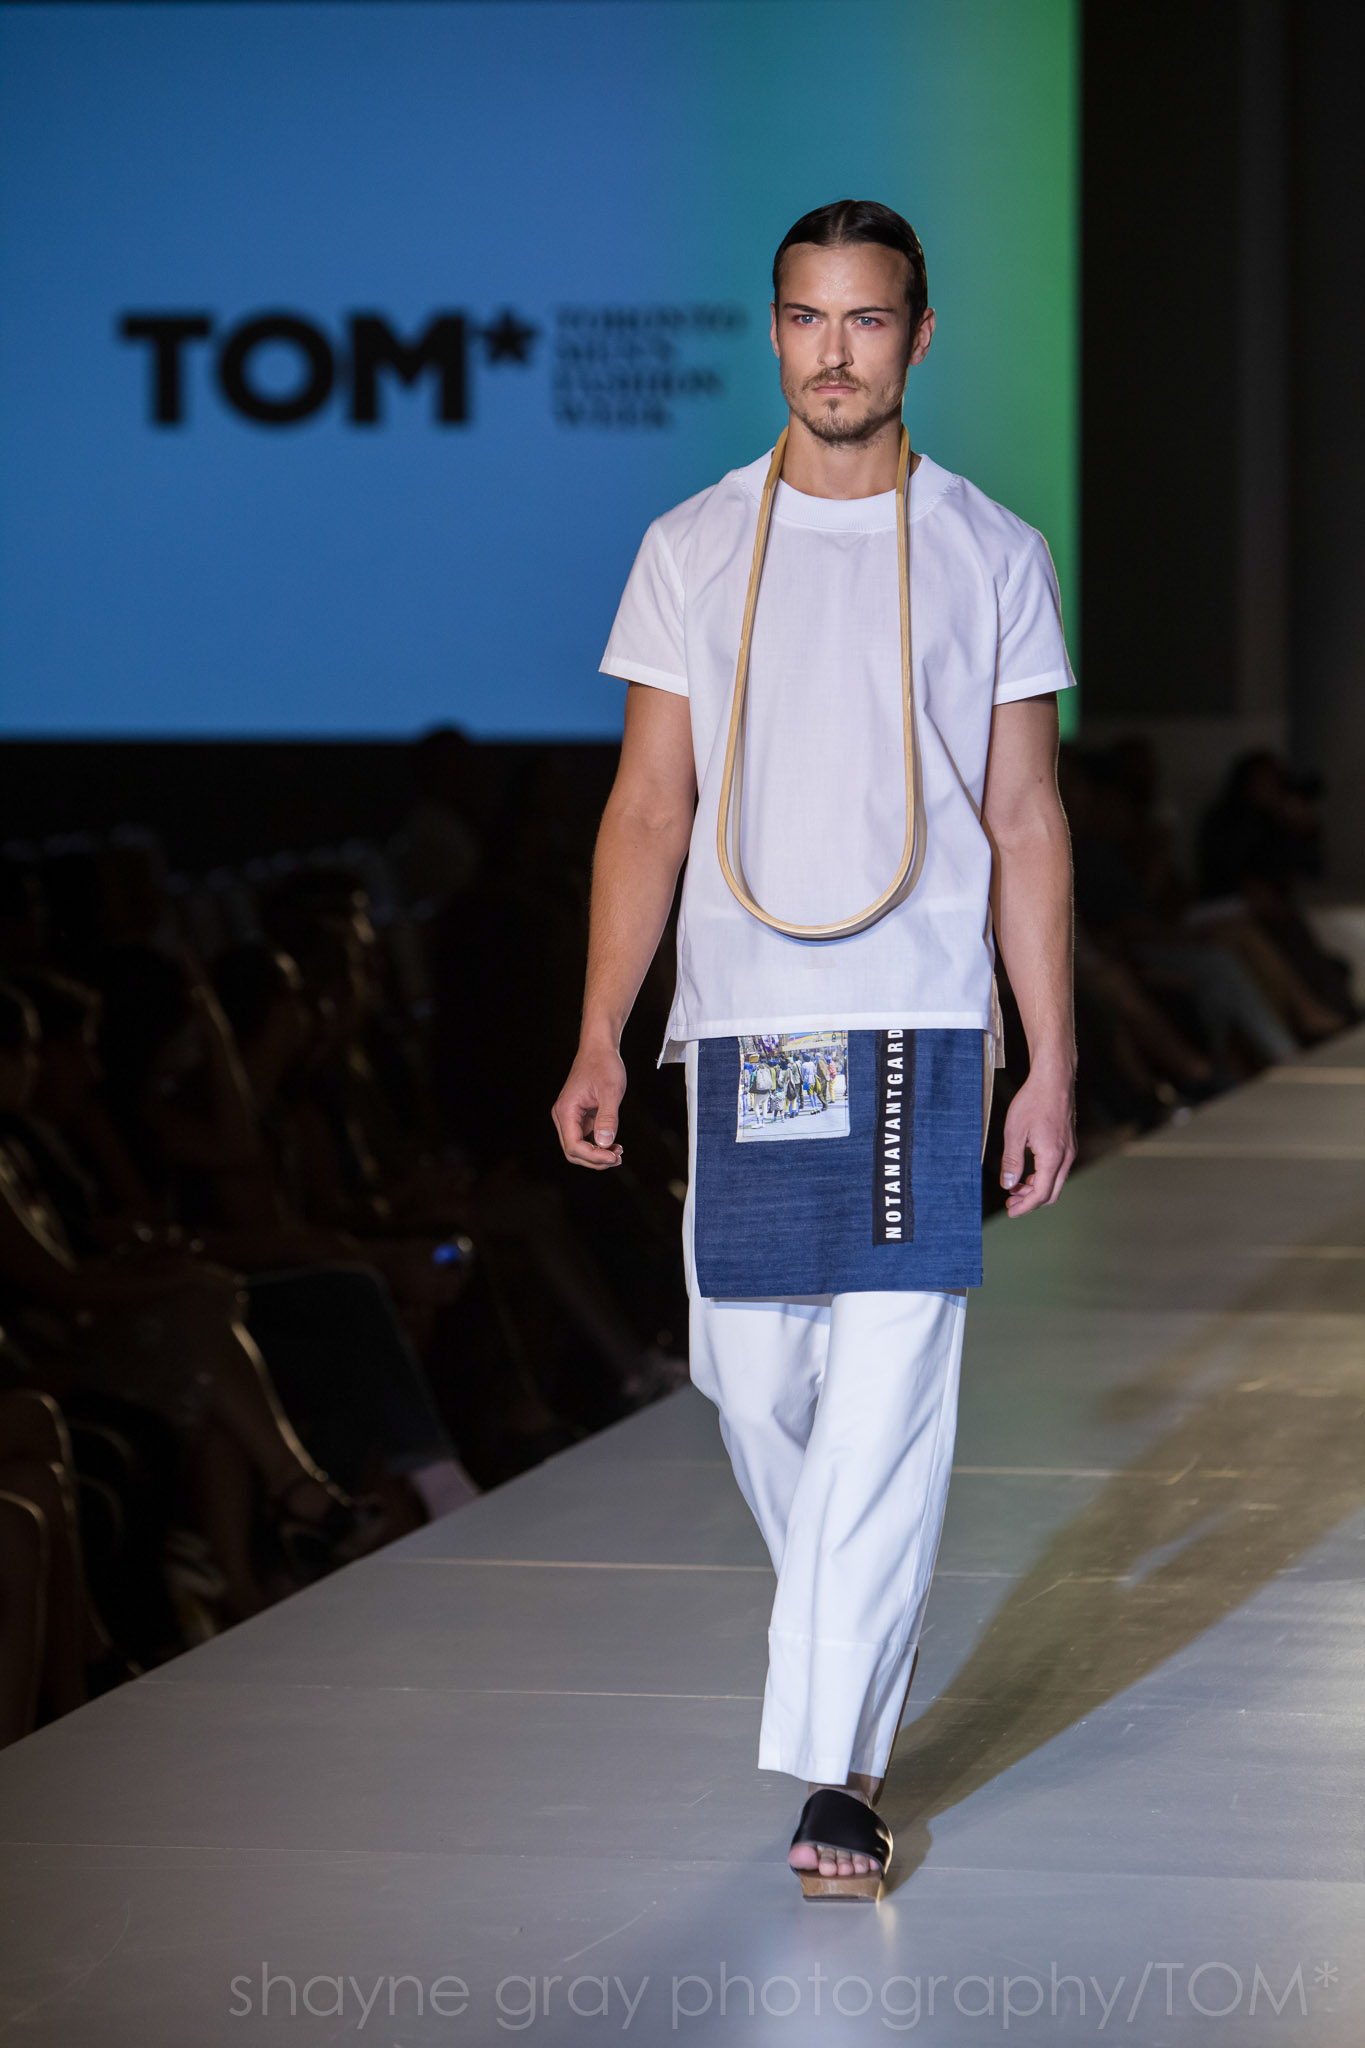 Shayne-Gray-Toronto-men's-fashion_week-TOM-wrkdept-8693.jpg